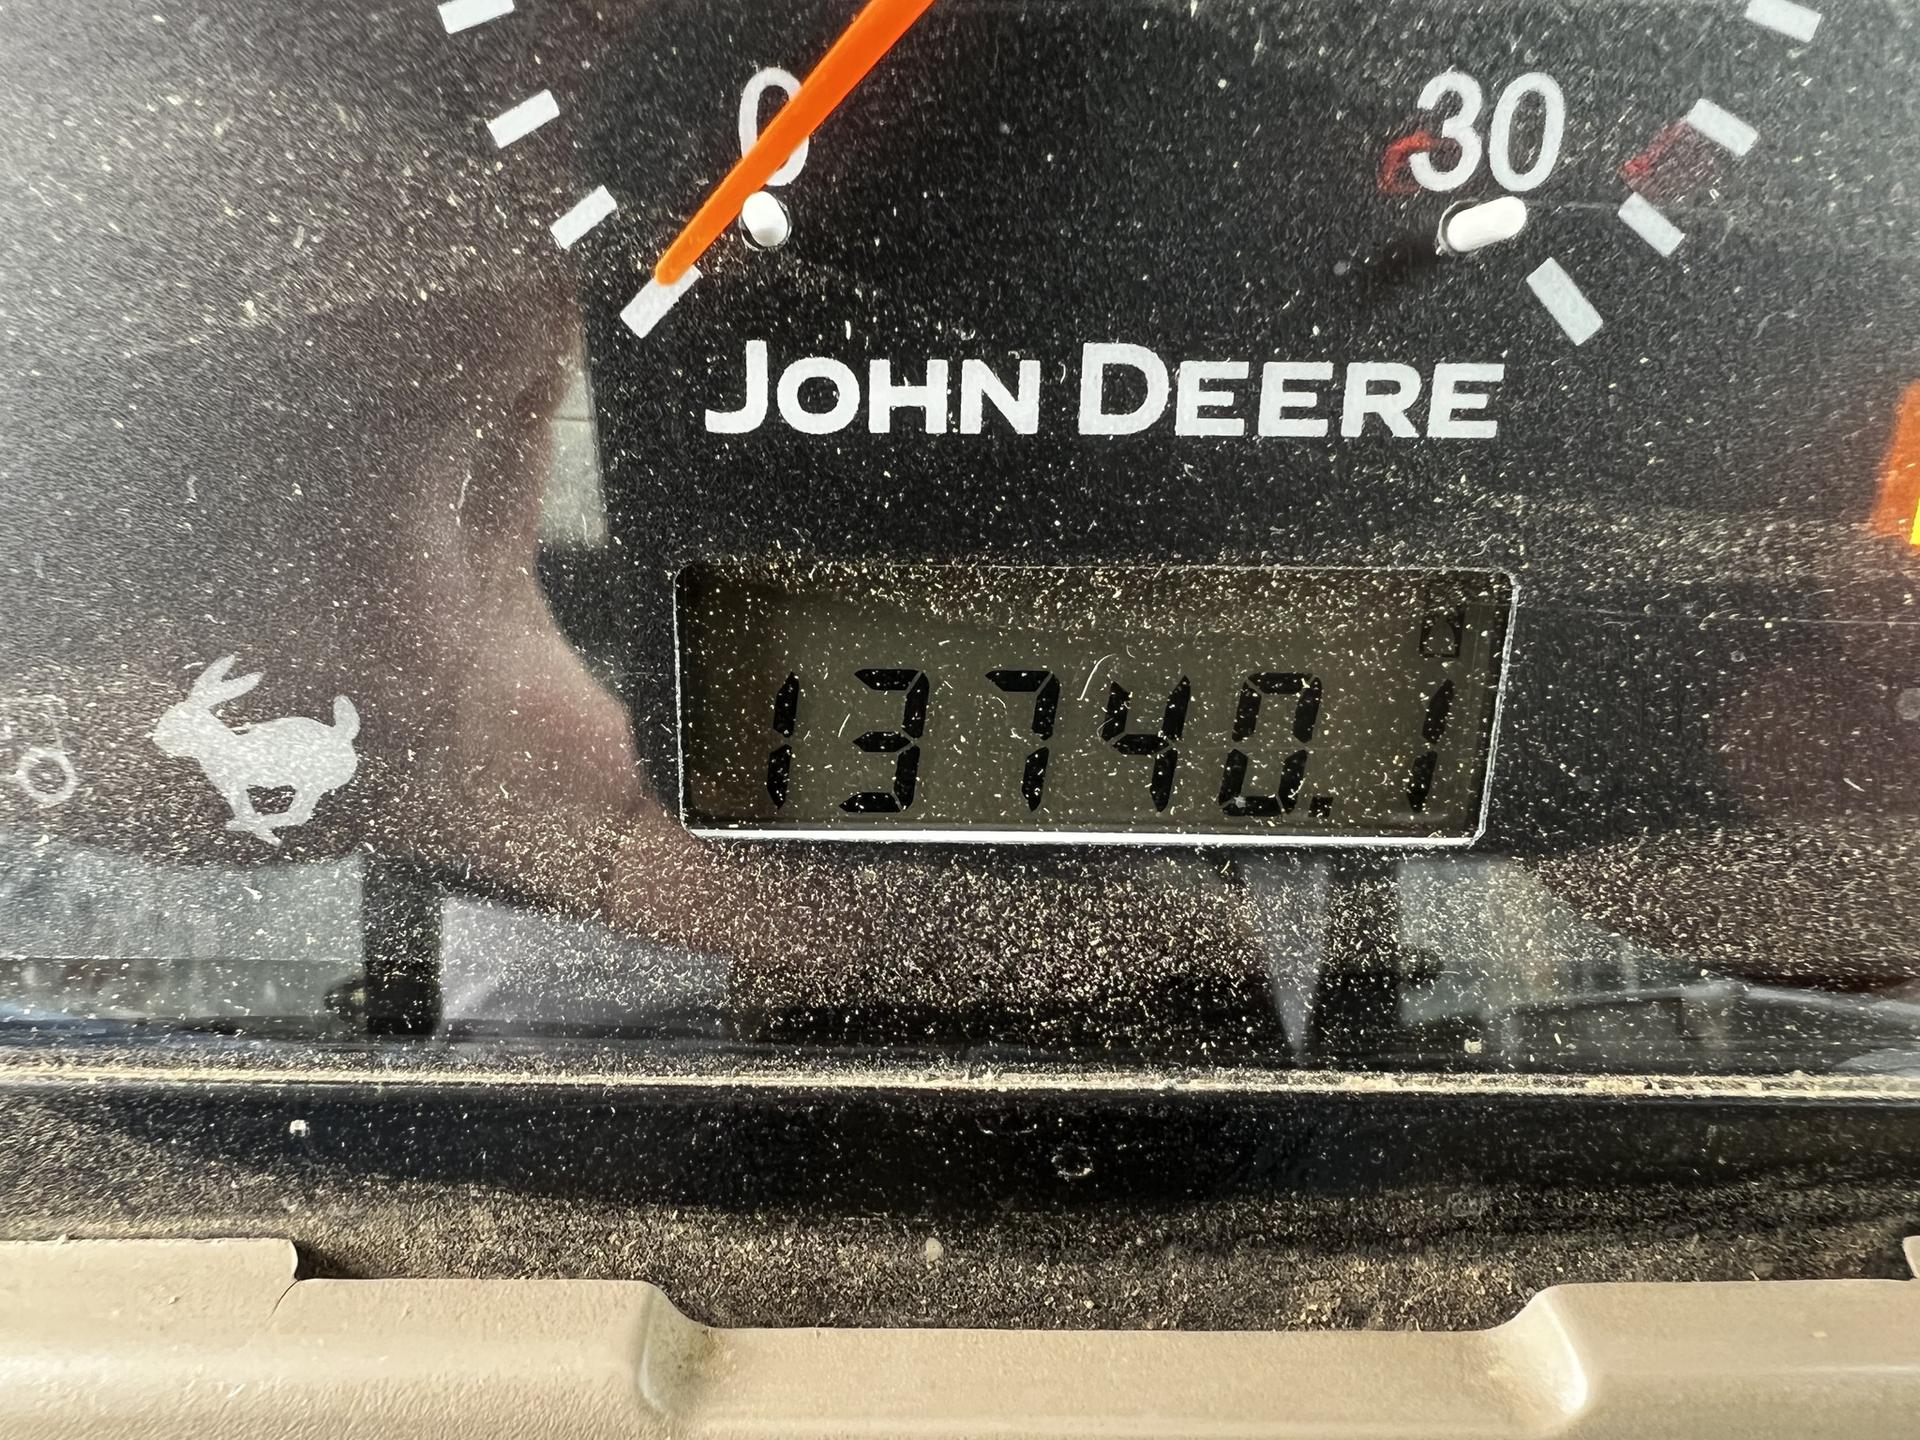 2007 John Deere 5603